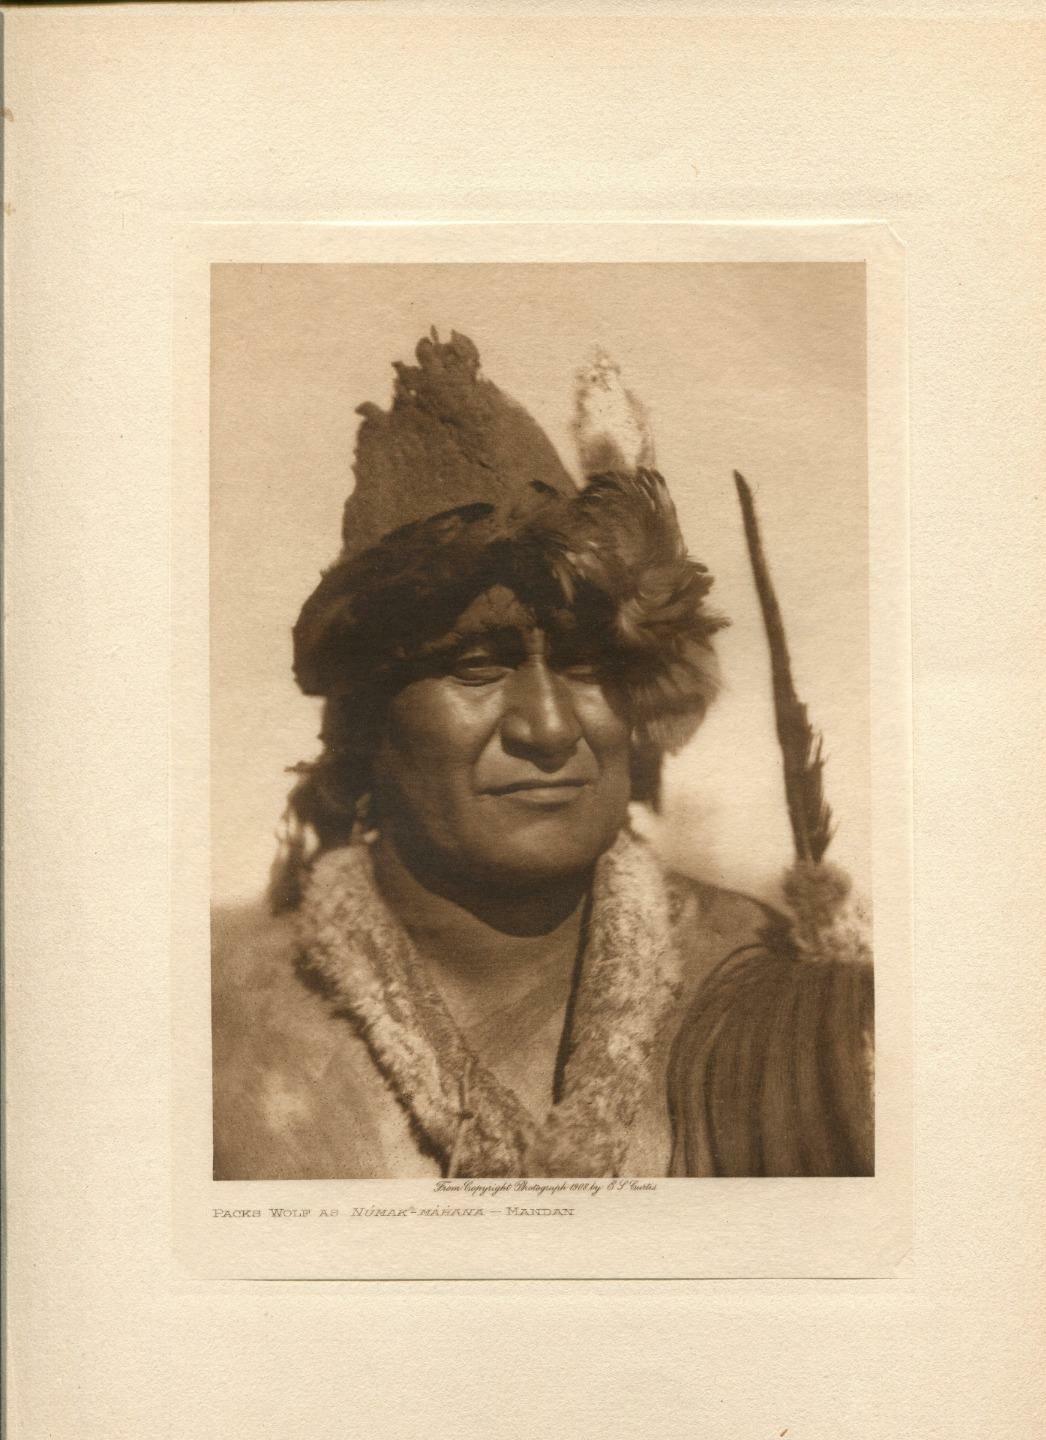 1908 Original Photogravure | Packs Wolf As Numak-Mahana - Mandan | Edward Curtis